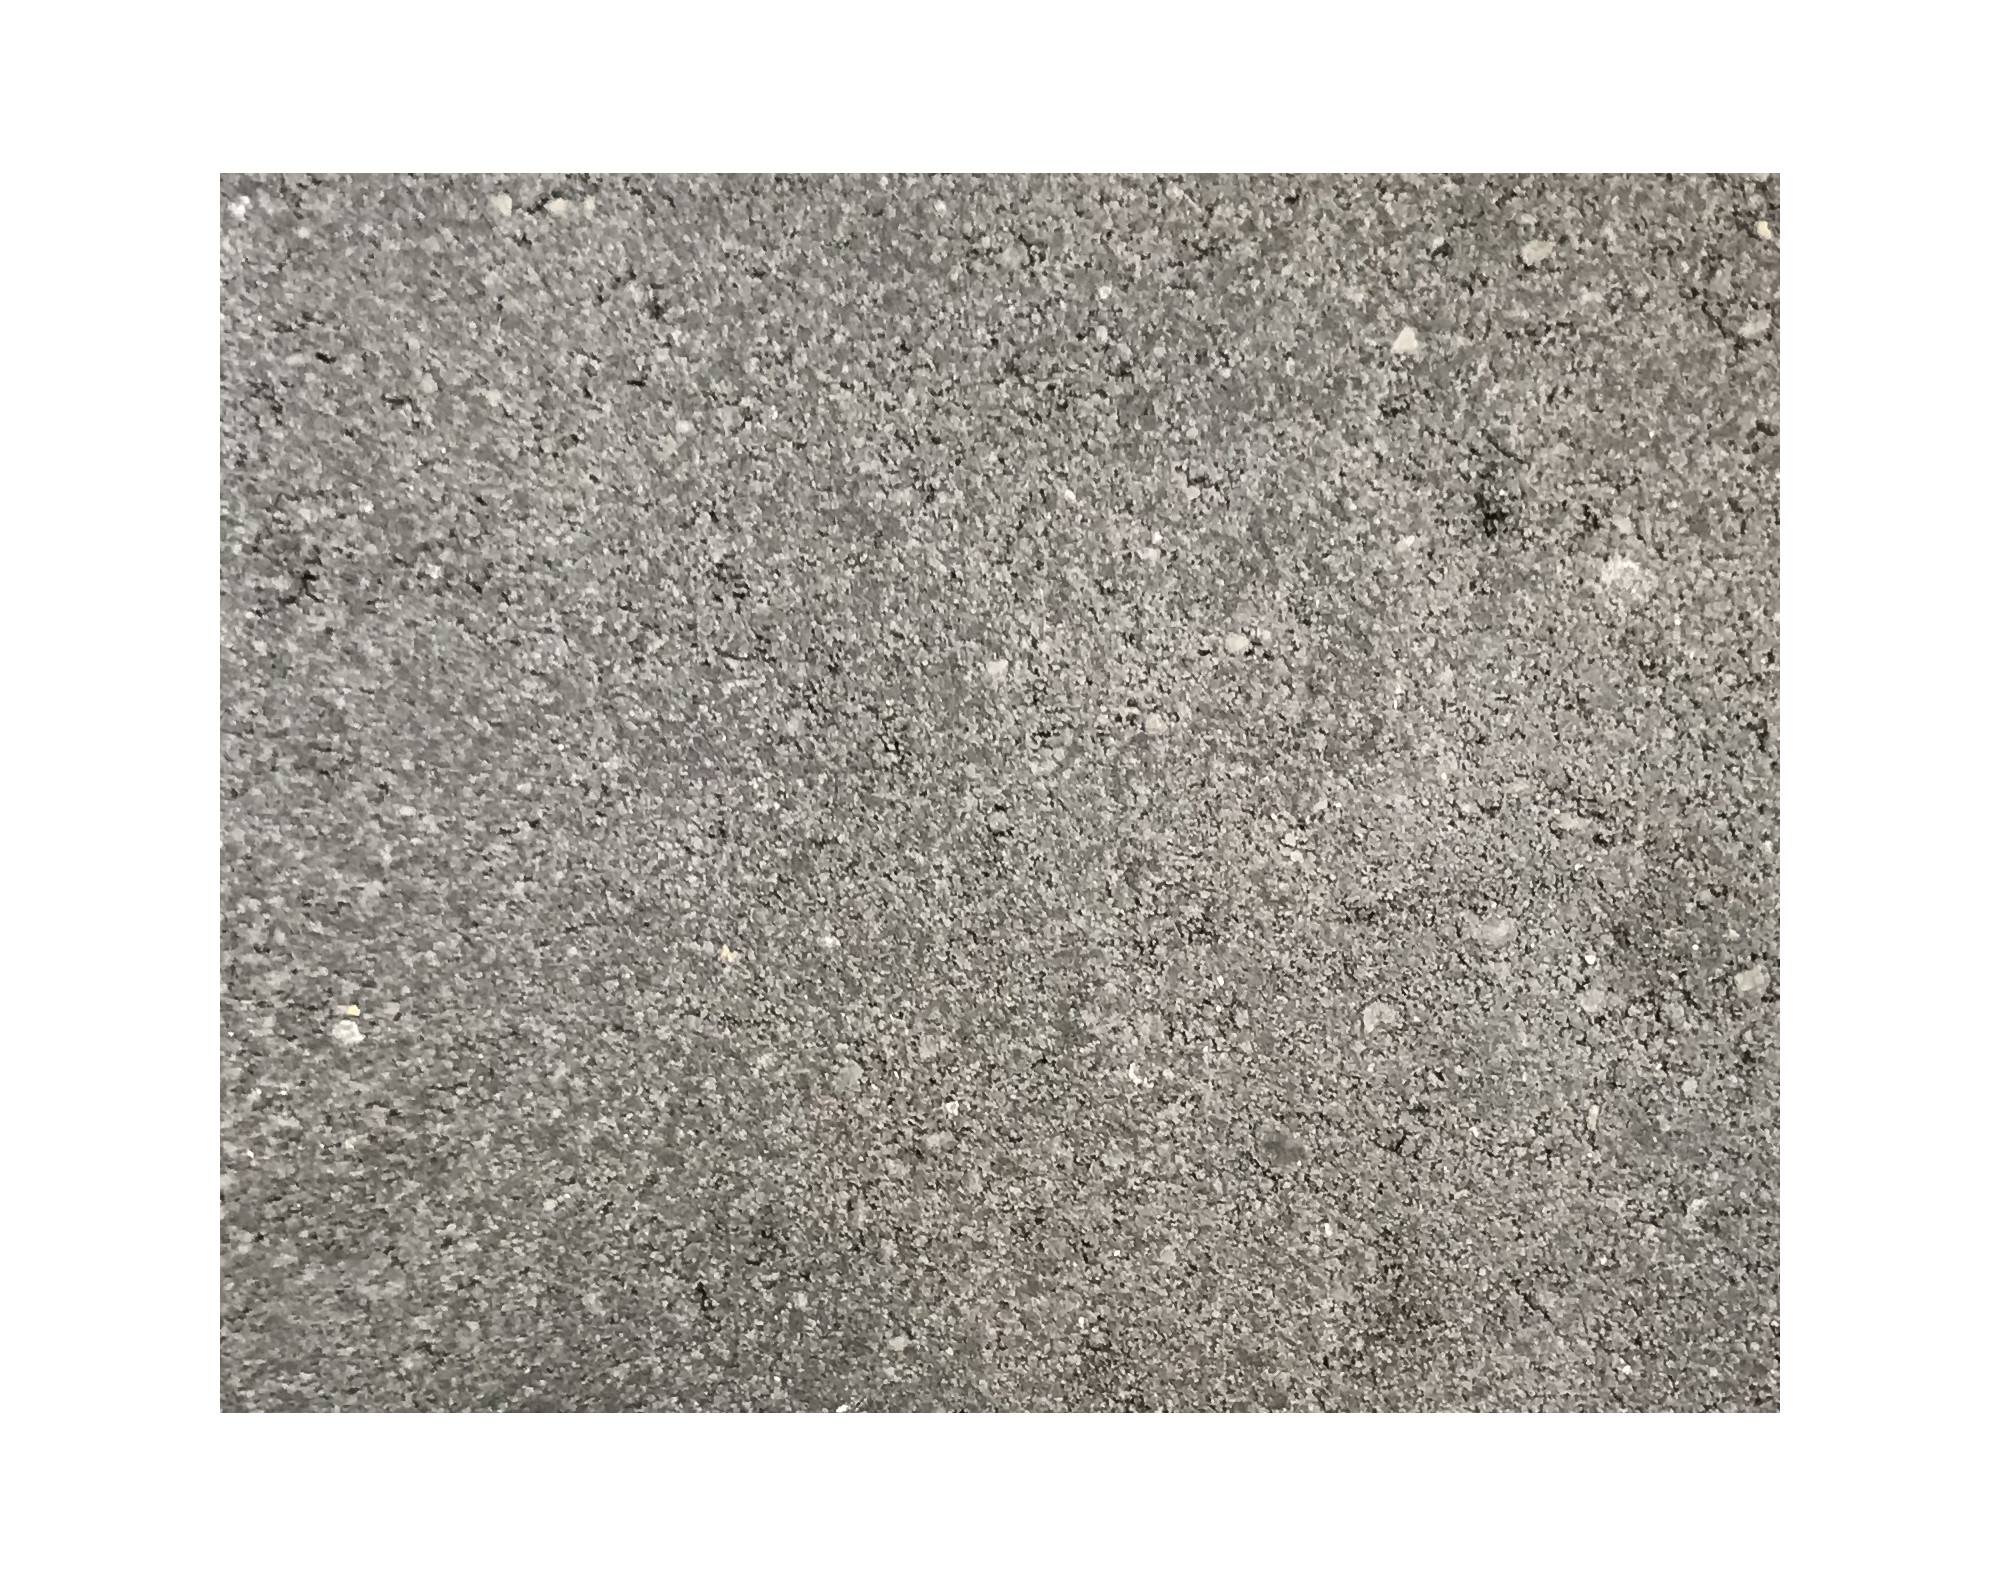 Harmo roc nevadaset, rustica-serie, ovaal d: 4,20mx9,50m, a.zwart, beton